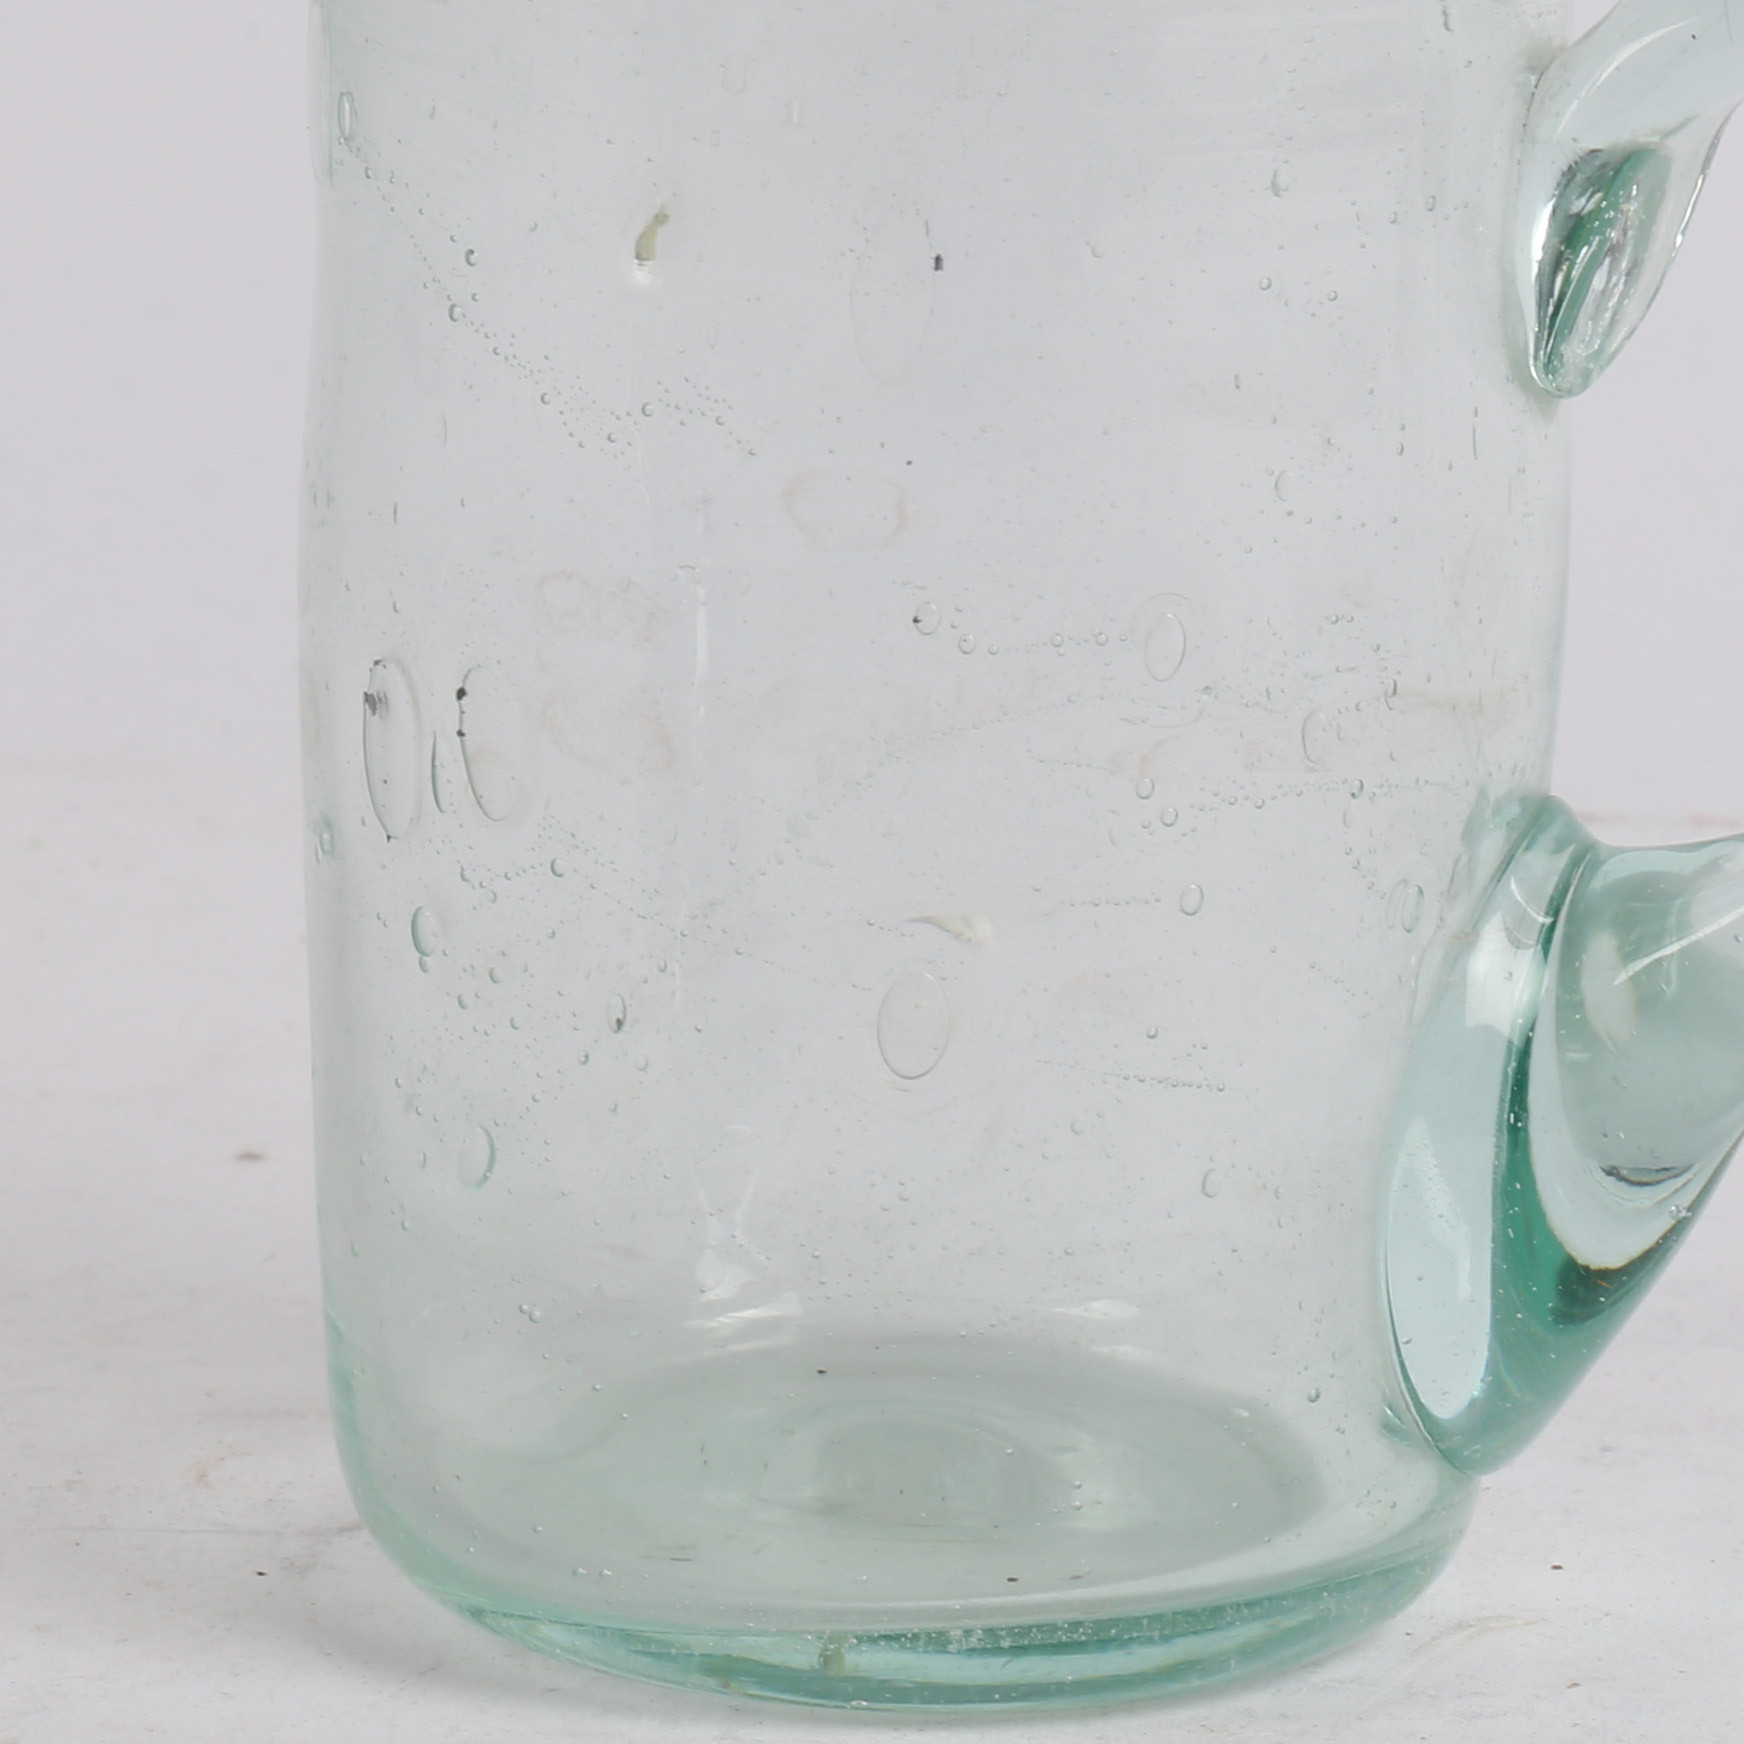 AN 18TH CENTURY GLASS MUG OR TANKARD. - Image 2 of 4